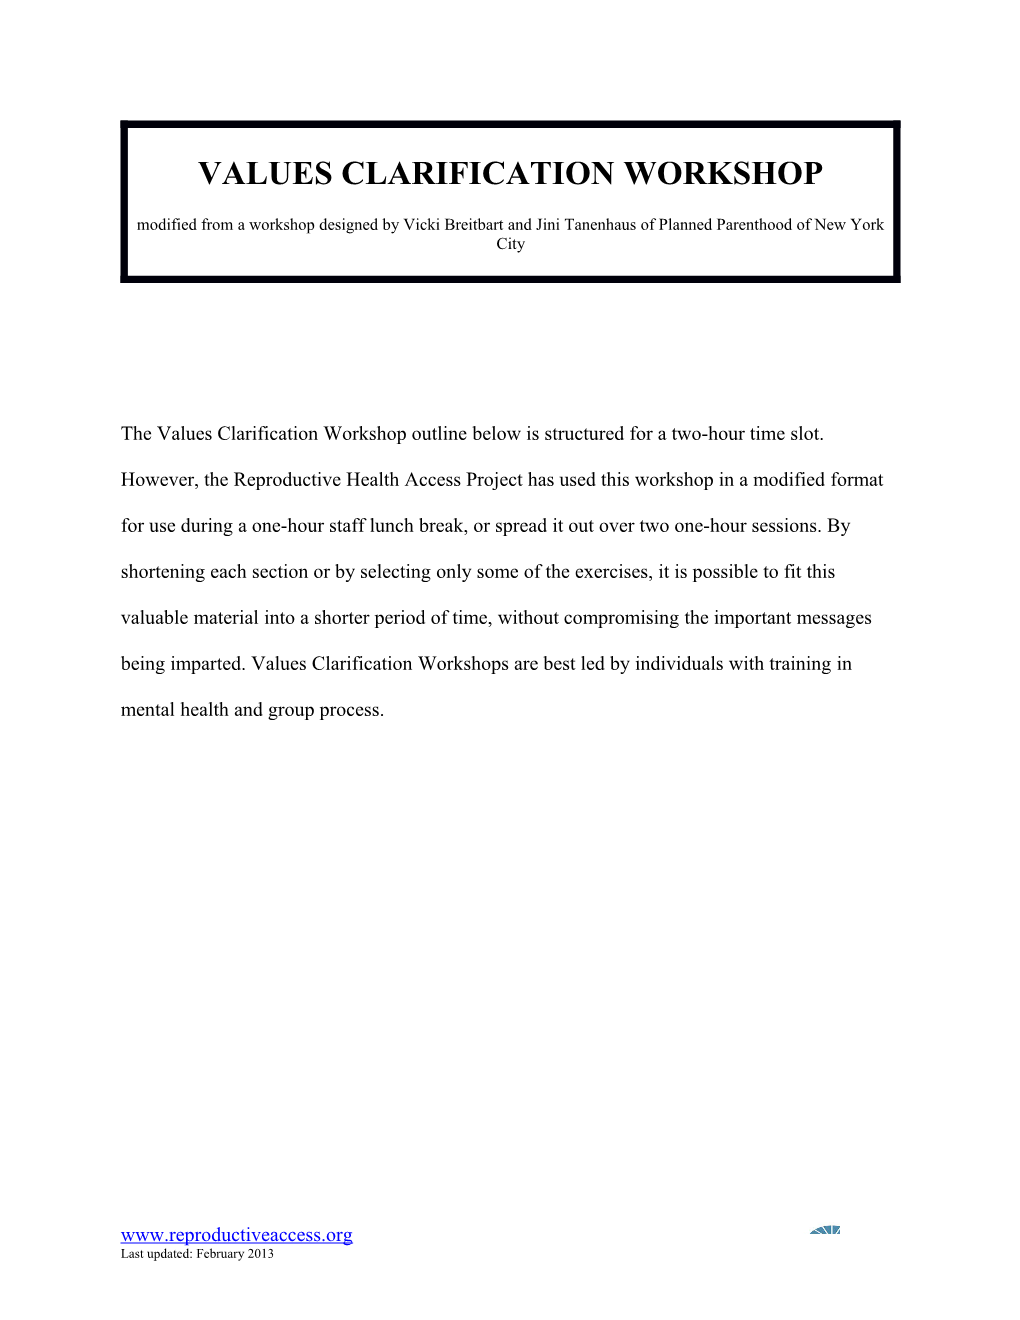 Values Clarification Worksh